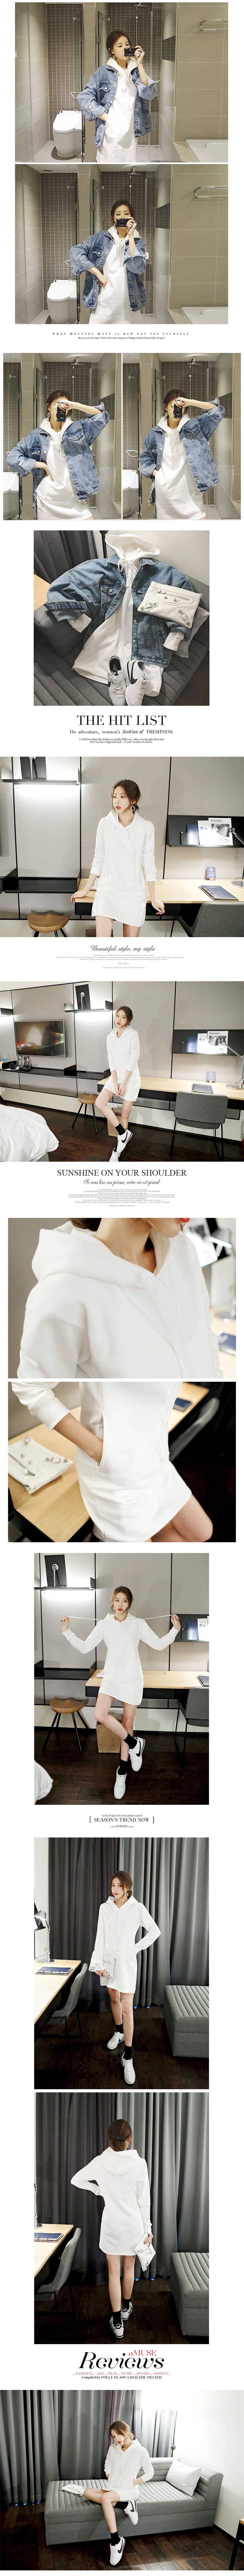 KOREA Hoodie Dress #Ivory One Size(S-M) [Free Shipping]